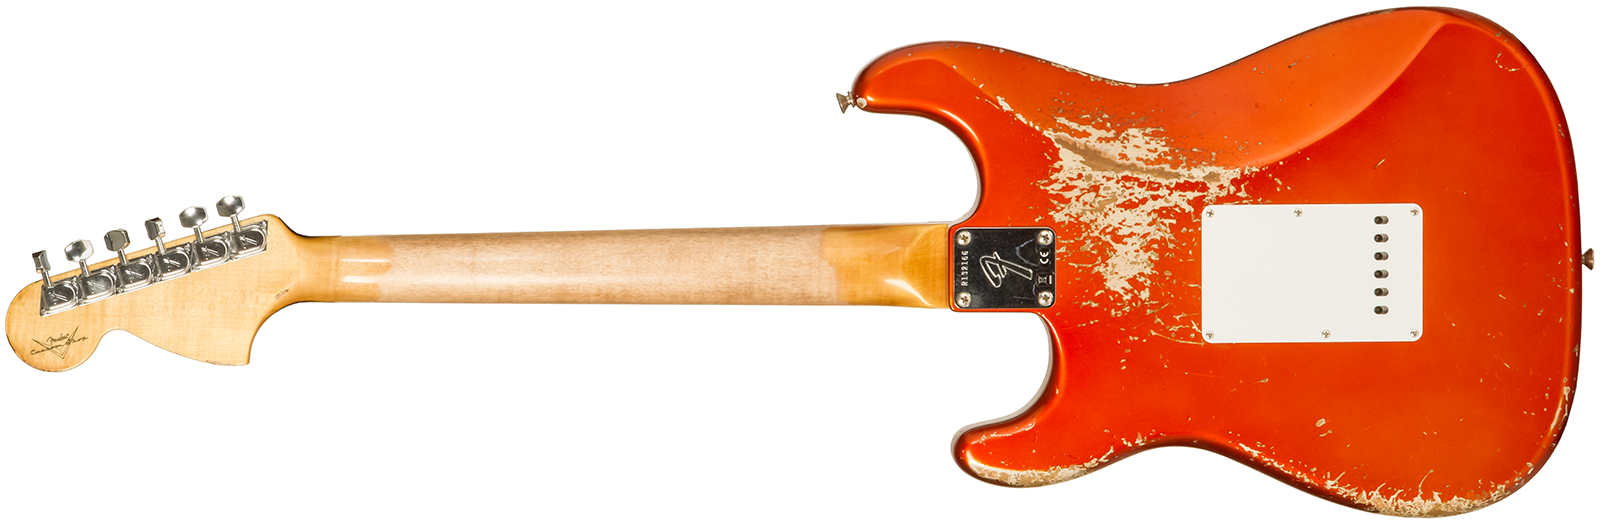 Fender Custom Shop Strat 1969 3s Trem Rw #r132166 - Heavy Relic Candy Tangerine - Str shape electric guitar - Variation 1